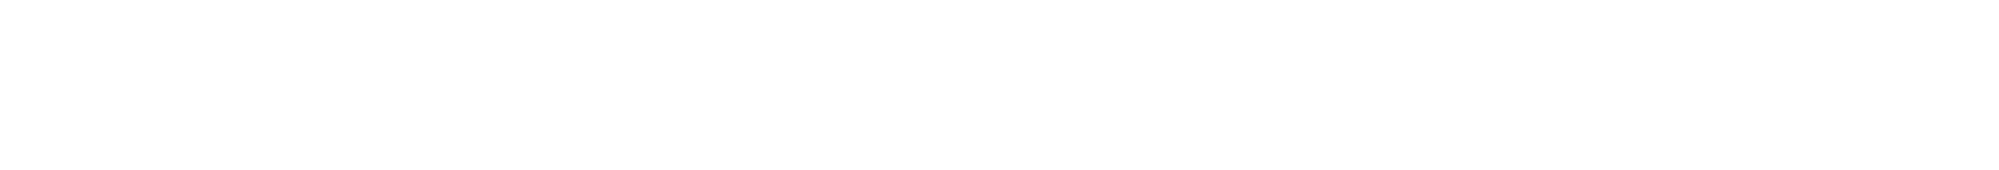 BrandIndex-logo-neg